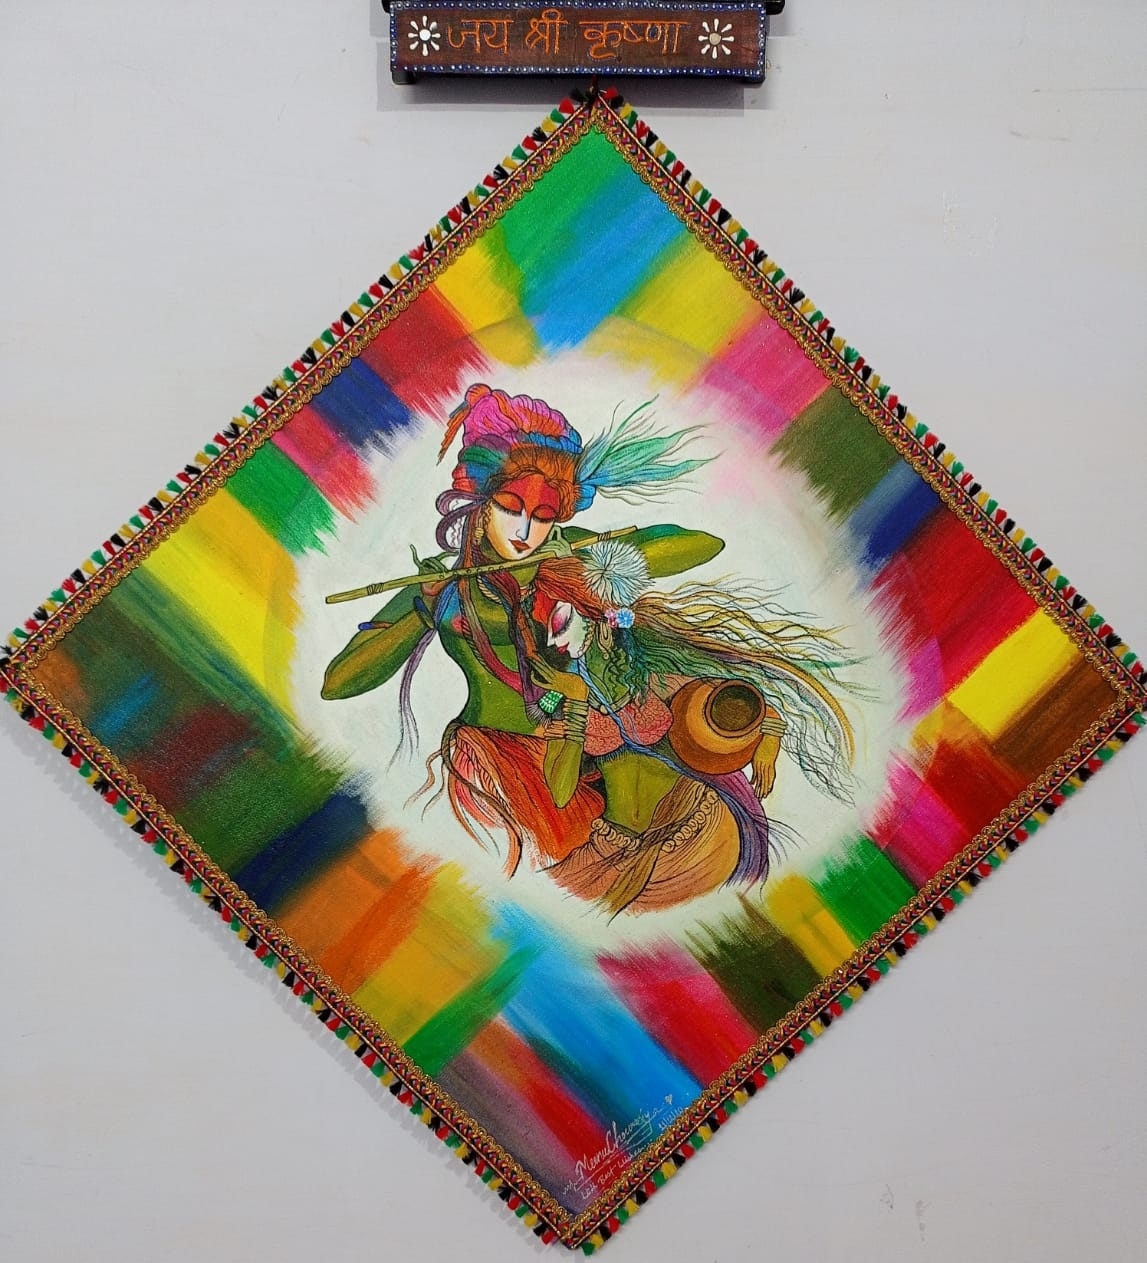 Meena Chourasiya 's Artwork